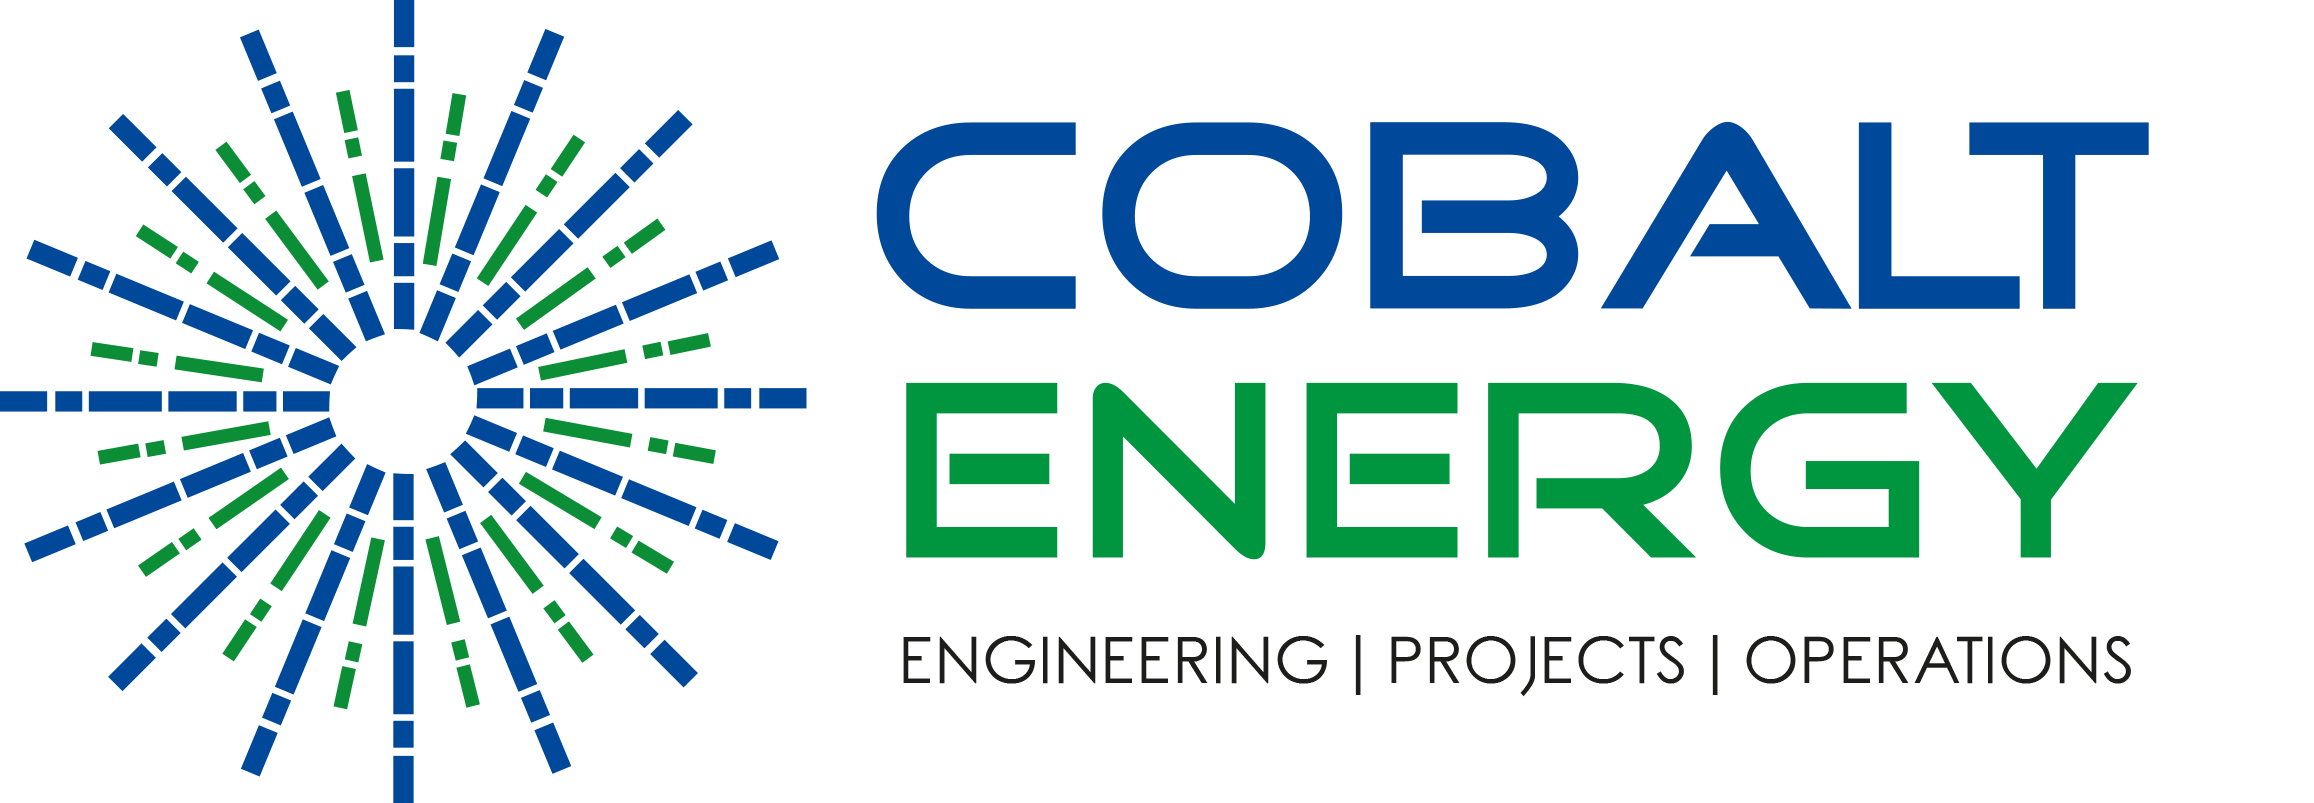 Cobalt-Energy-logo